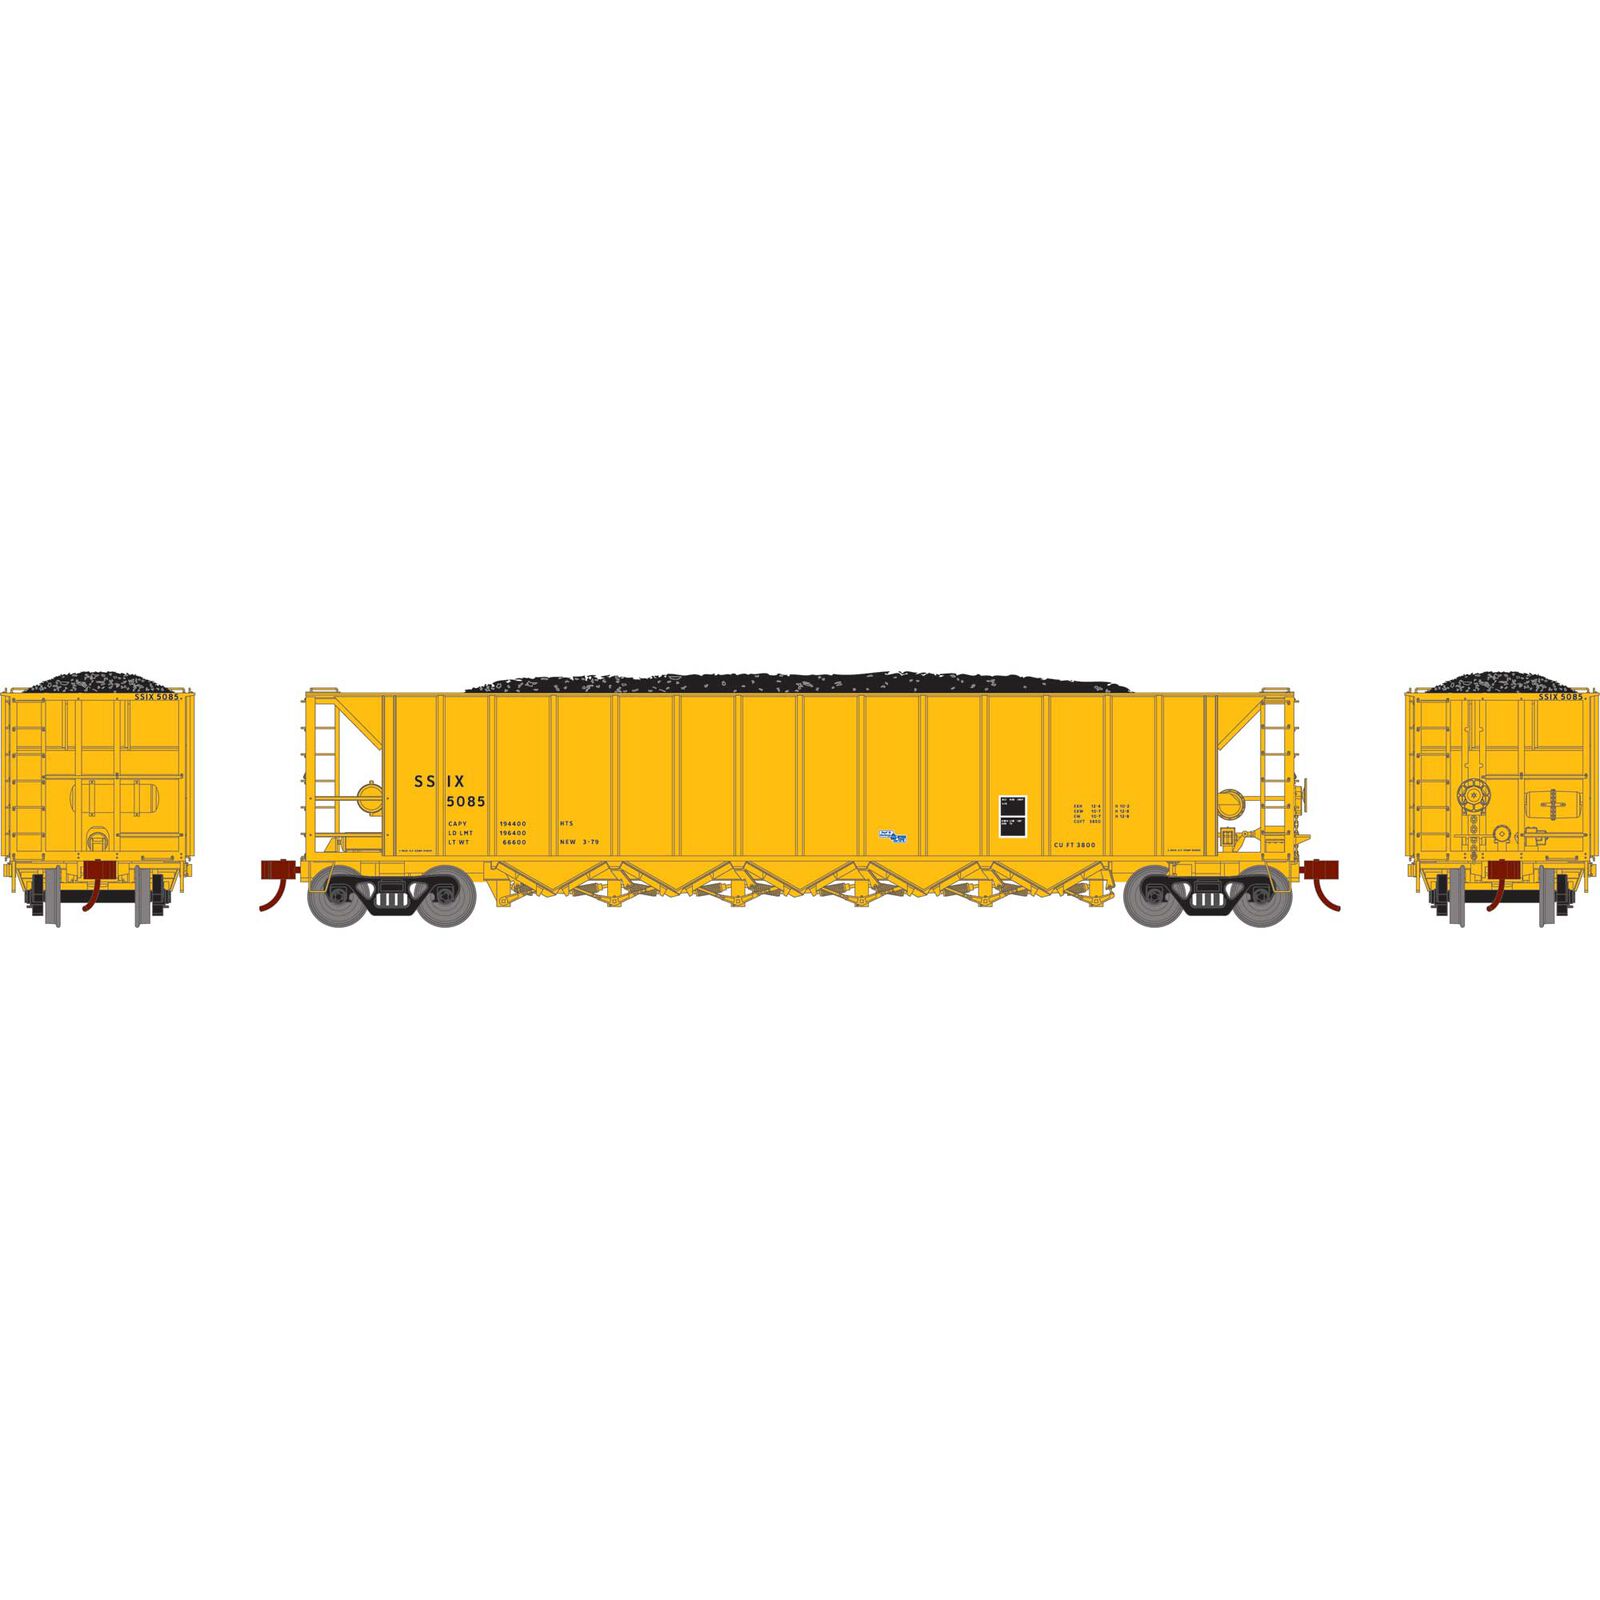 HO Ortner 5-Bay Rapid Discharge Hopper, SSIX #5091 / 5094 / 5098 / 5099 /  5101 (5) Model Train | Athearn